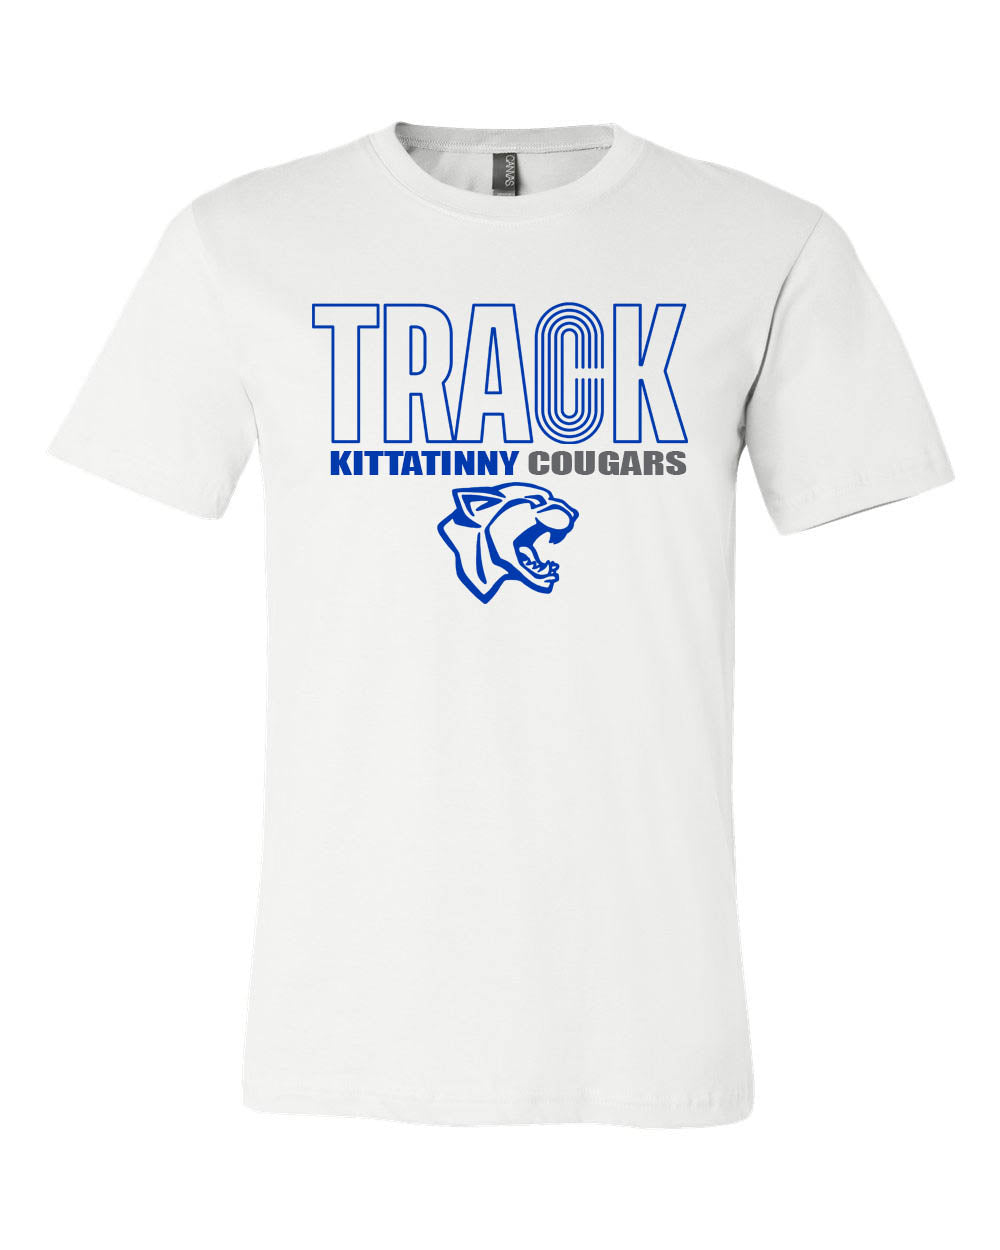 Kittatinny Track design 1 T-Shirt